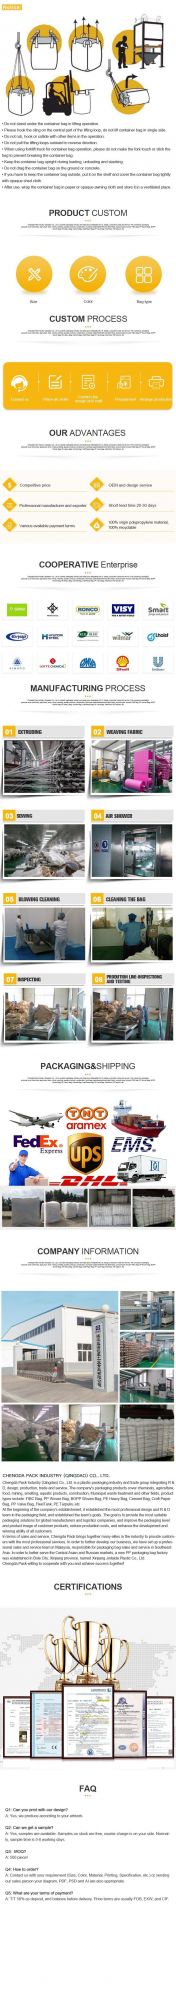 Whosale FIBC Jumbo Bag 1 Tonne Big U-Panel Bulk Bag Container Bag Indian Supplier